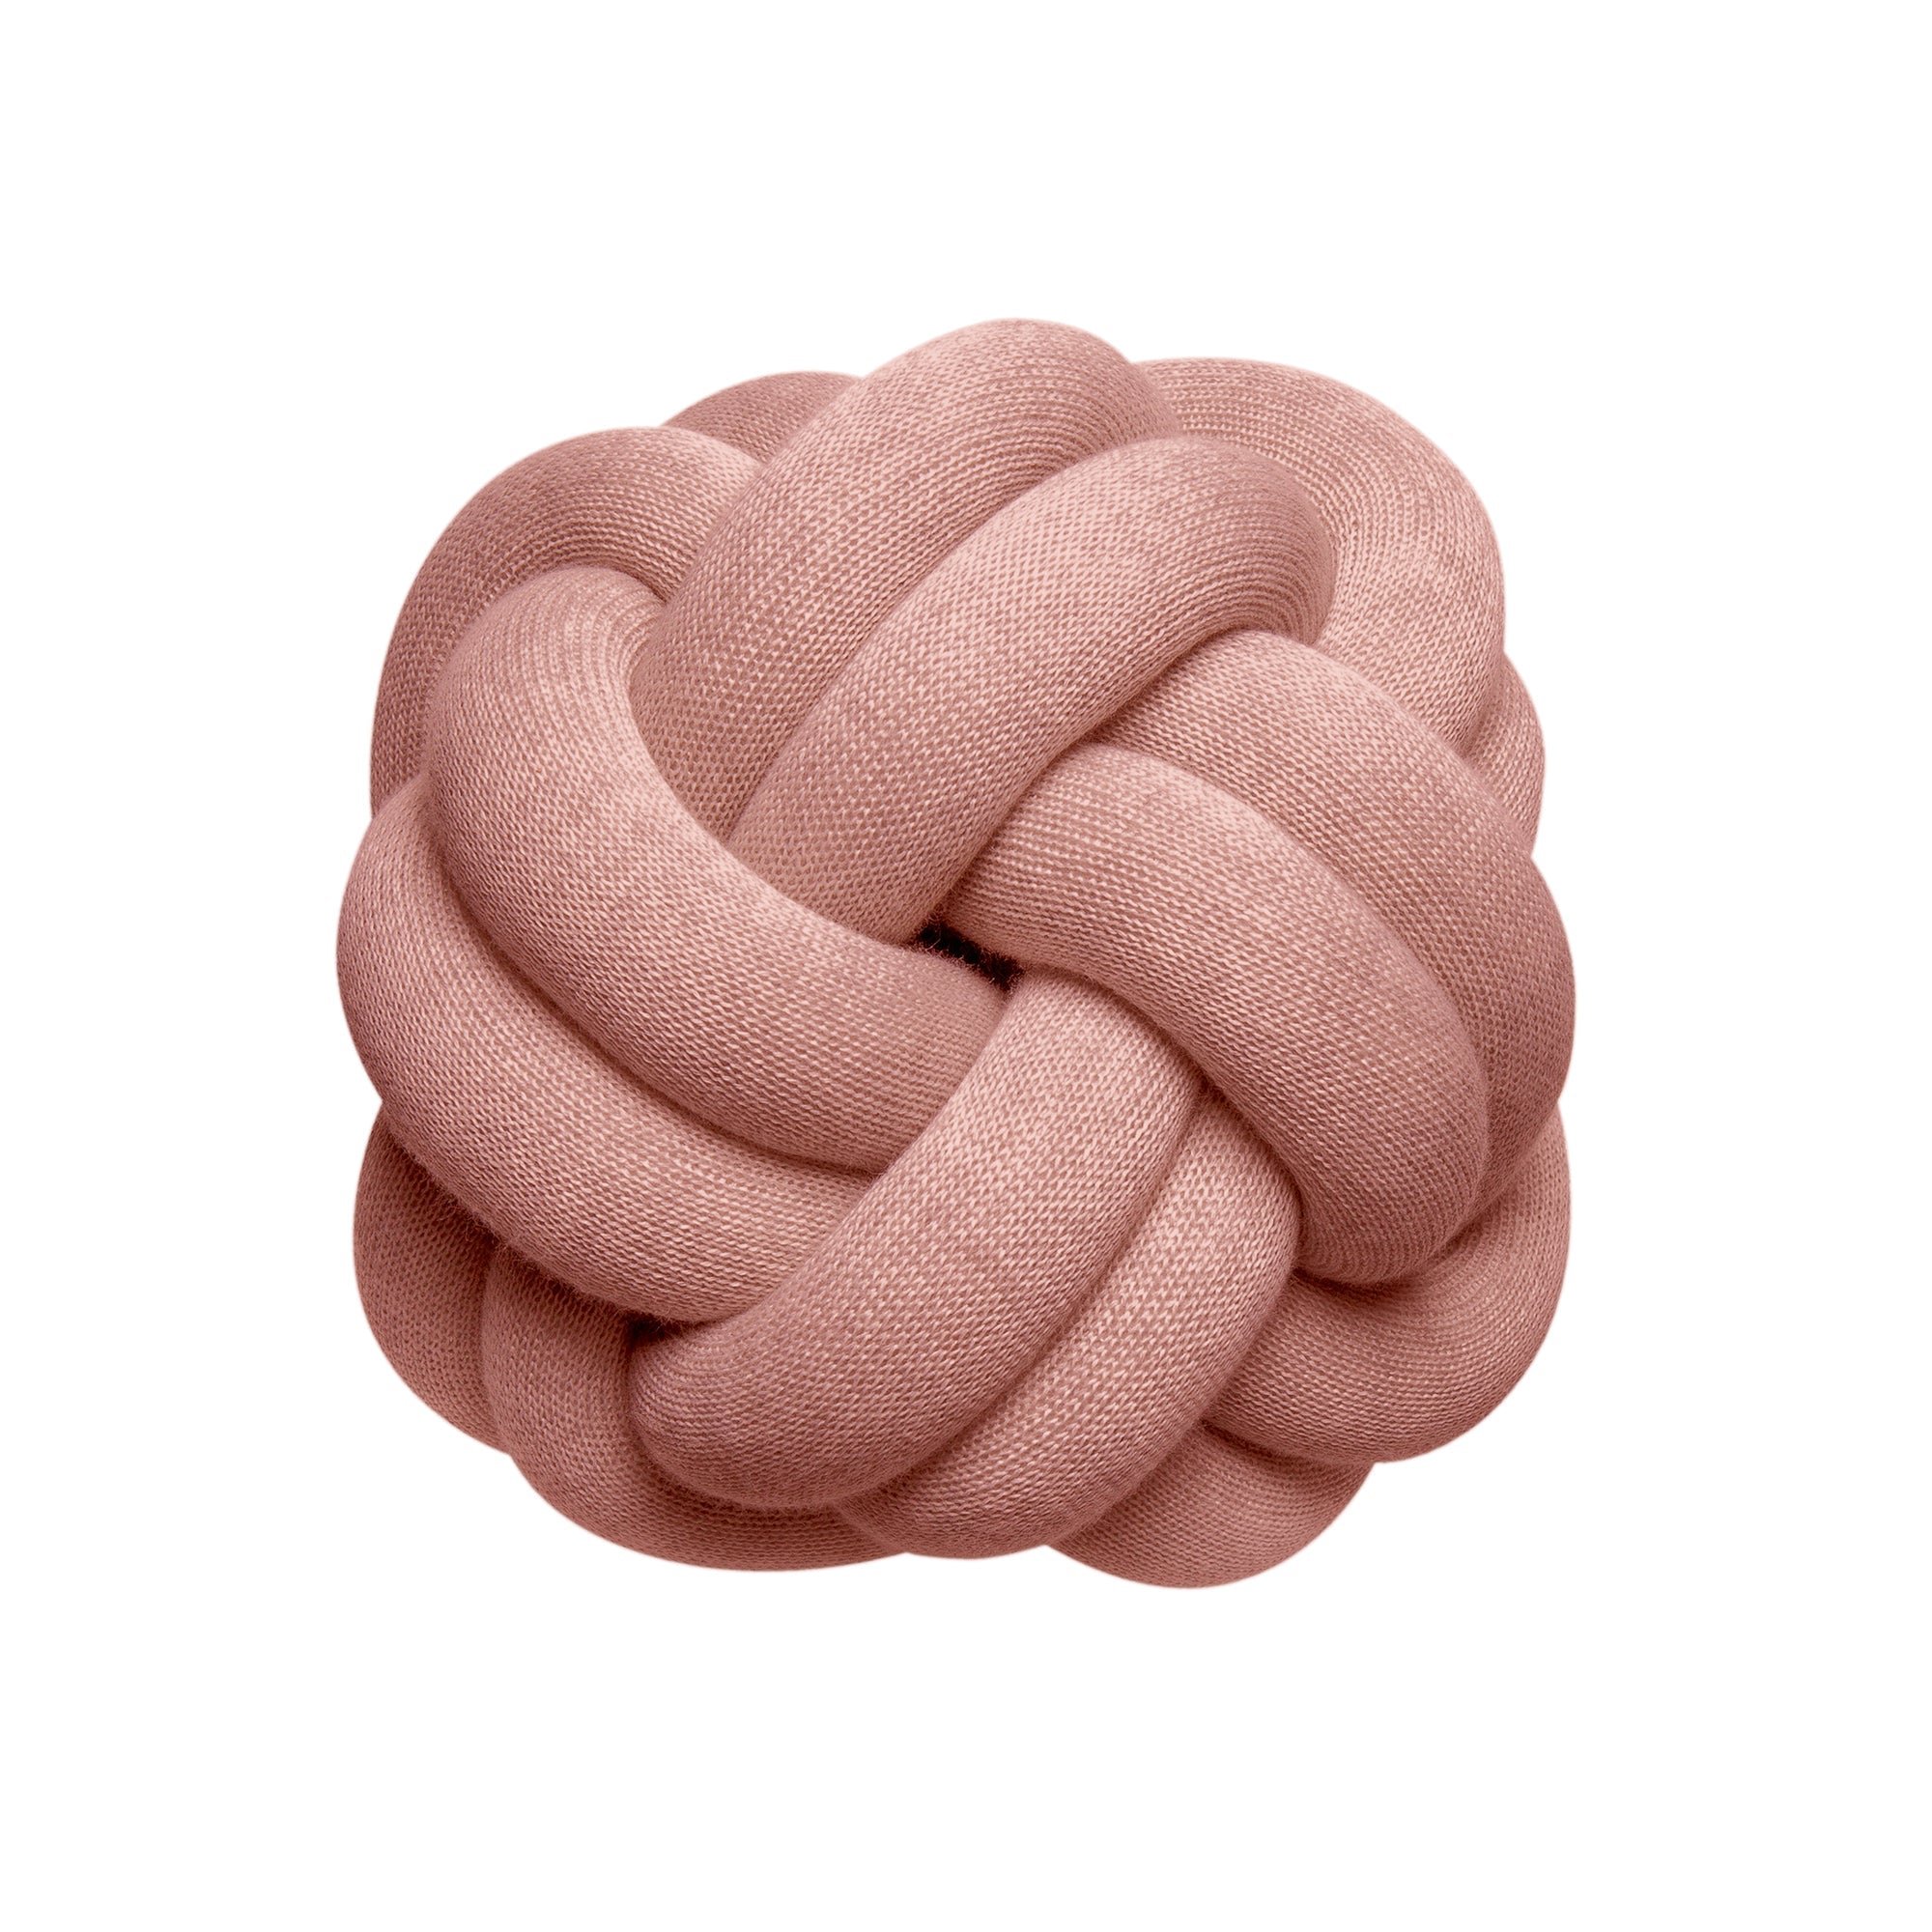 design-house-stockholm-knot-cushion-pink-28855959683175_2100x.jpg